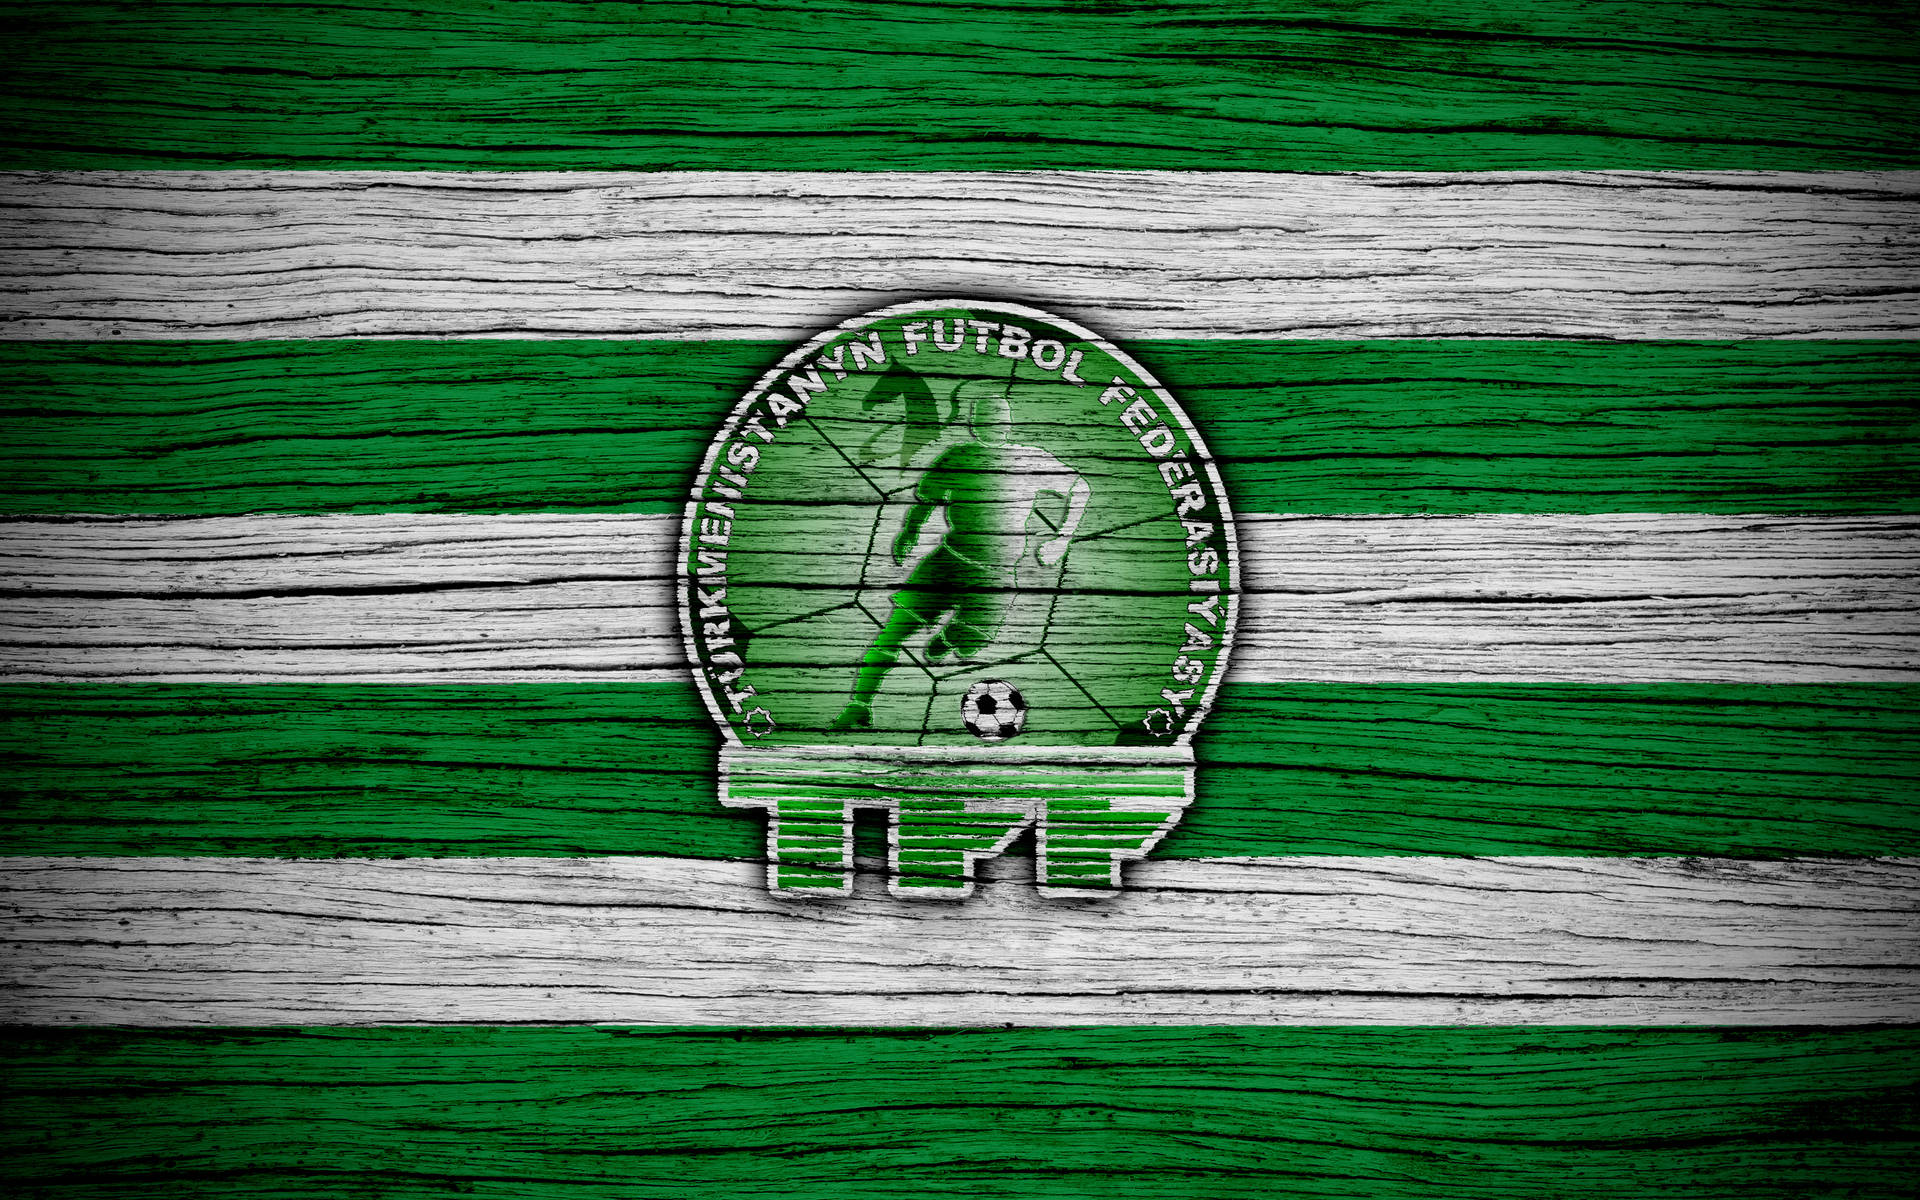 Turkmenistan Football Federation Wood Wallpaper